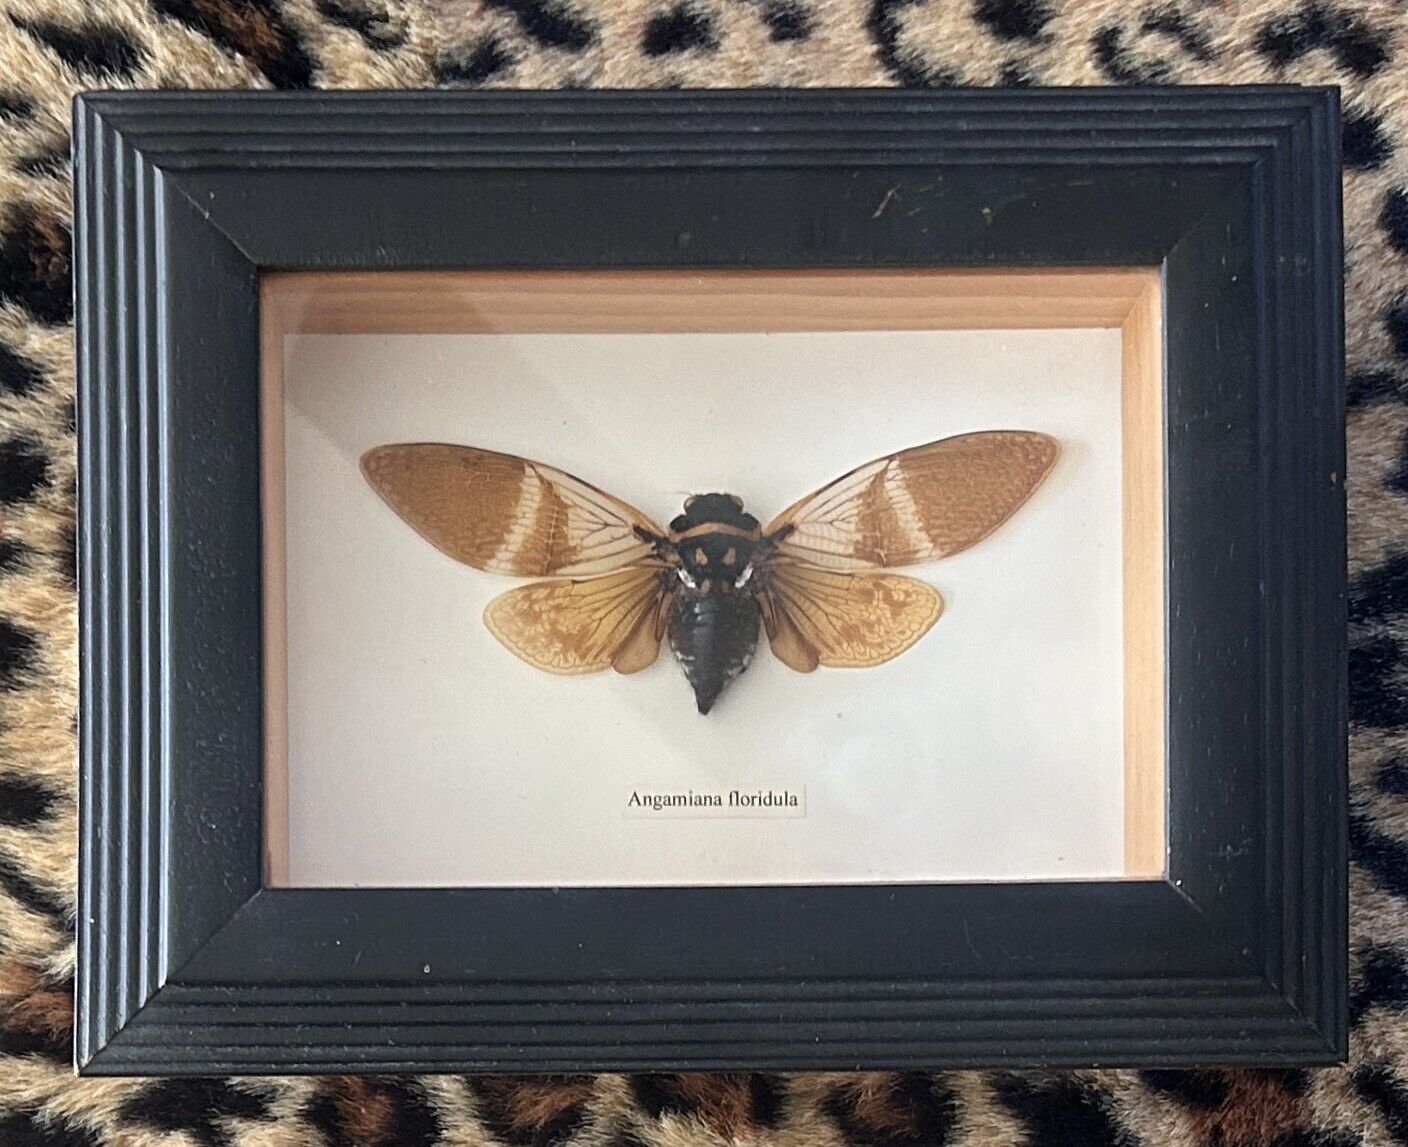 Real Framed cicadas angamiana floridula Shadow Box Taxidermy Artwork Oddity Deco